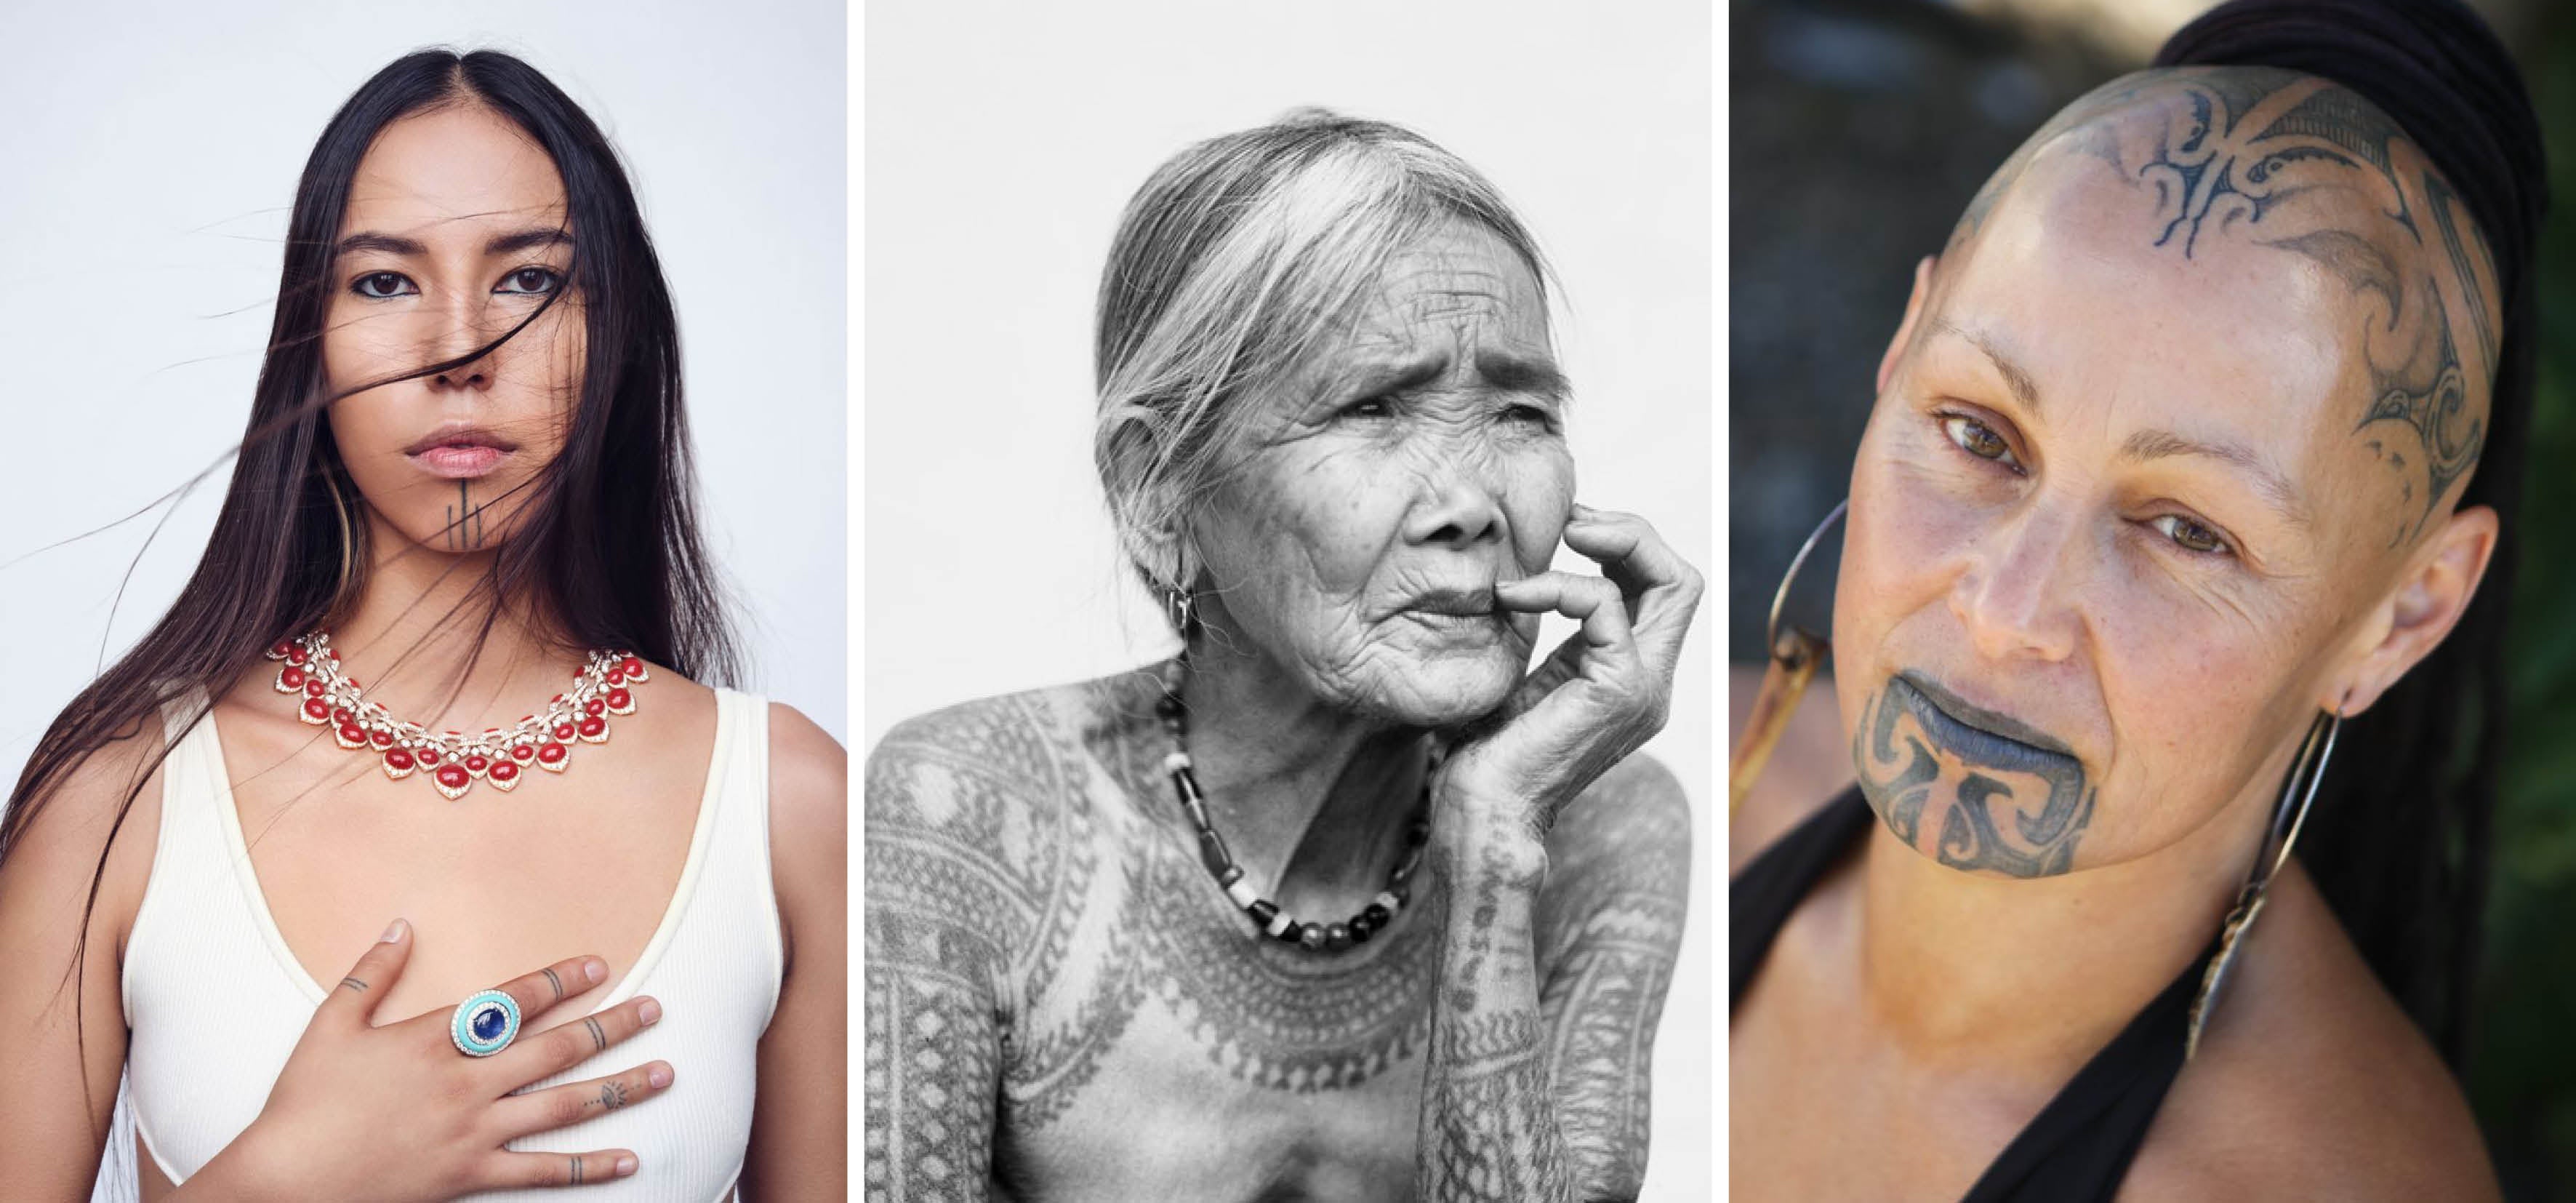 Unique spine tattoos for women: 20 inspiring designs to choose from -  Tuko.co.ke